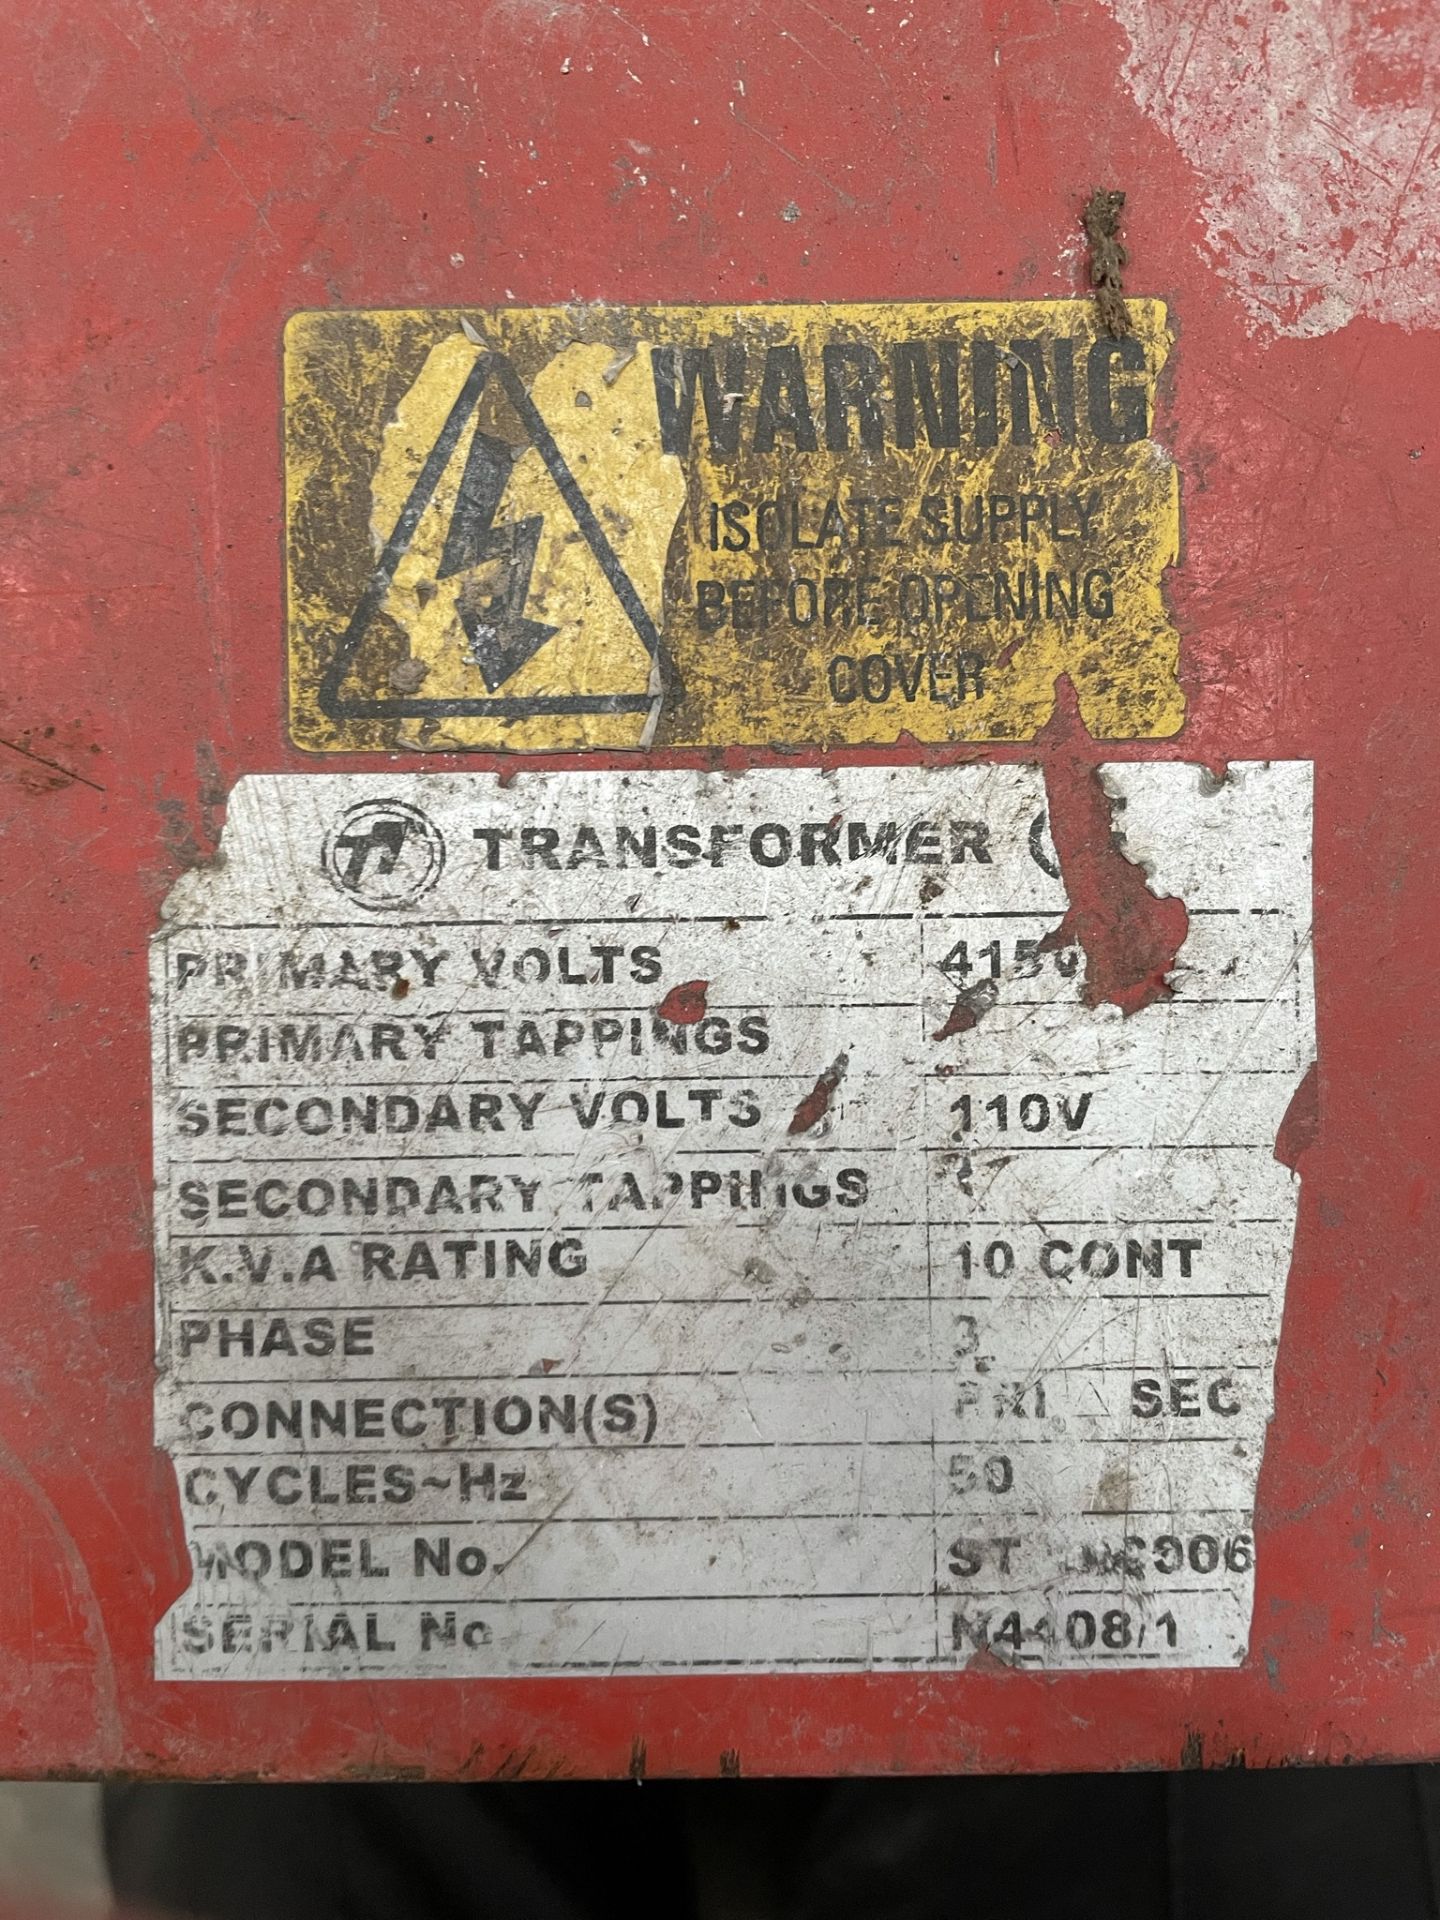 Taylor Transformers 110/415v Portable Site Transformer Unit - Image 5 of 5